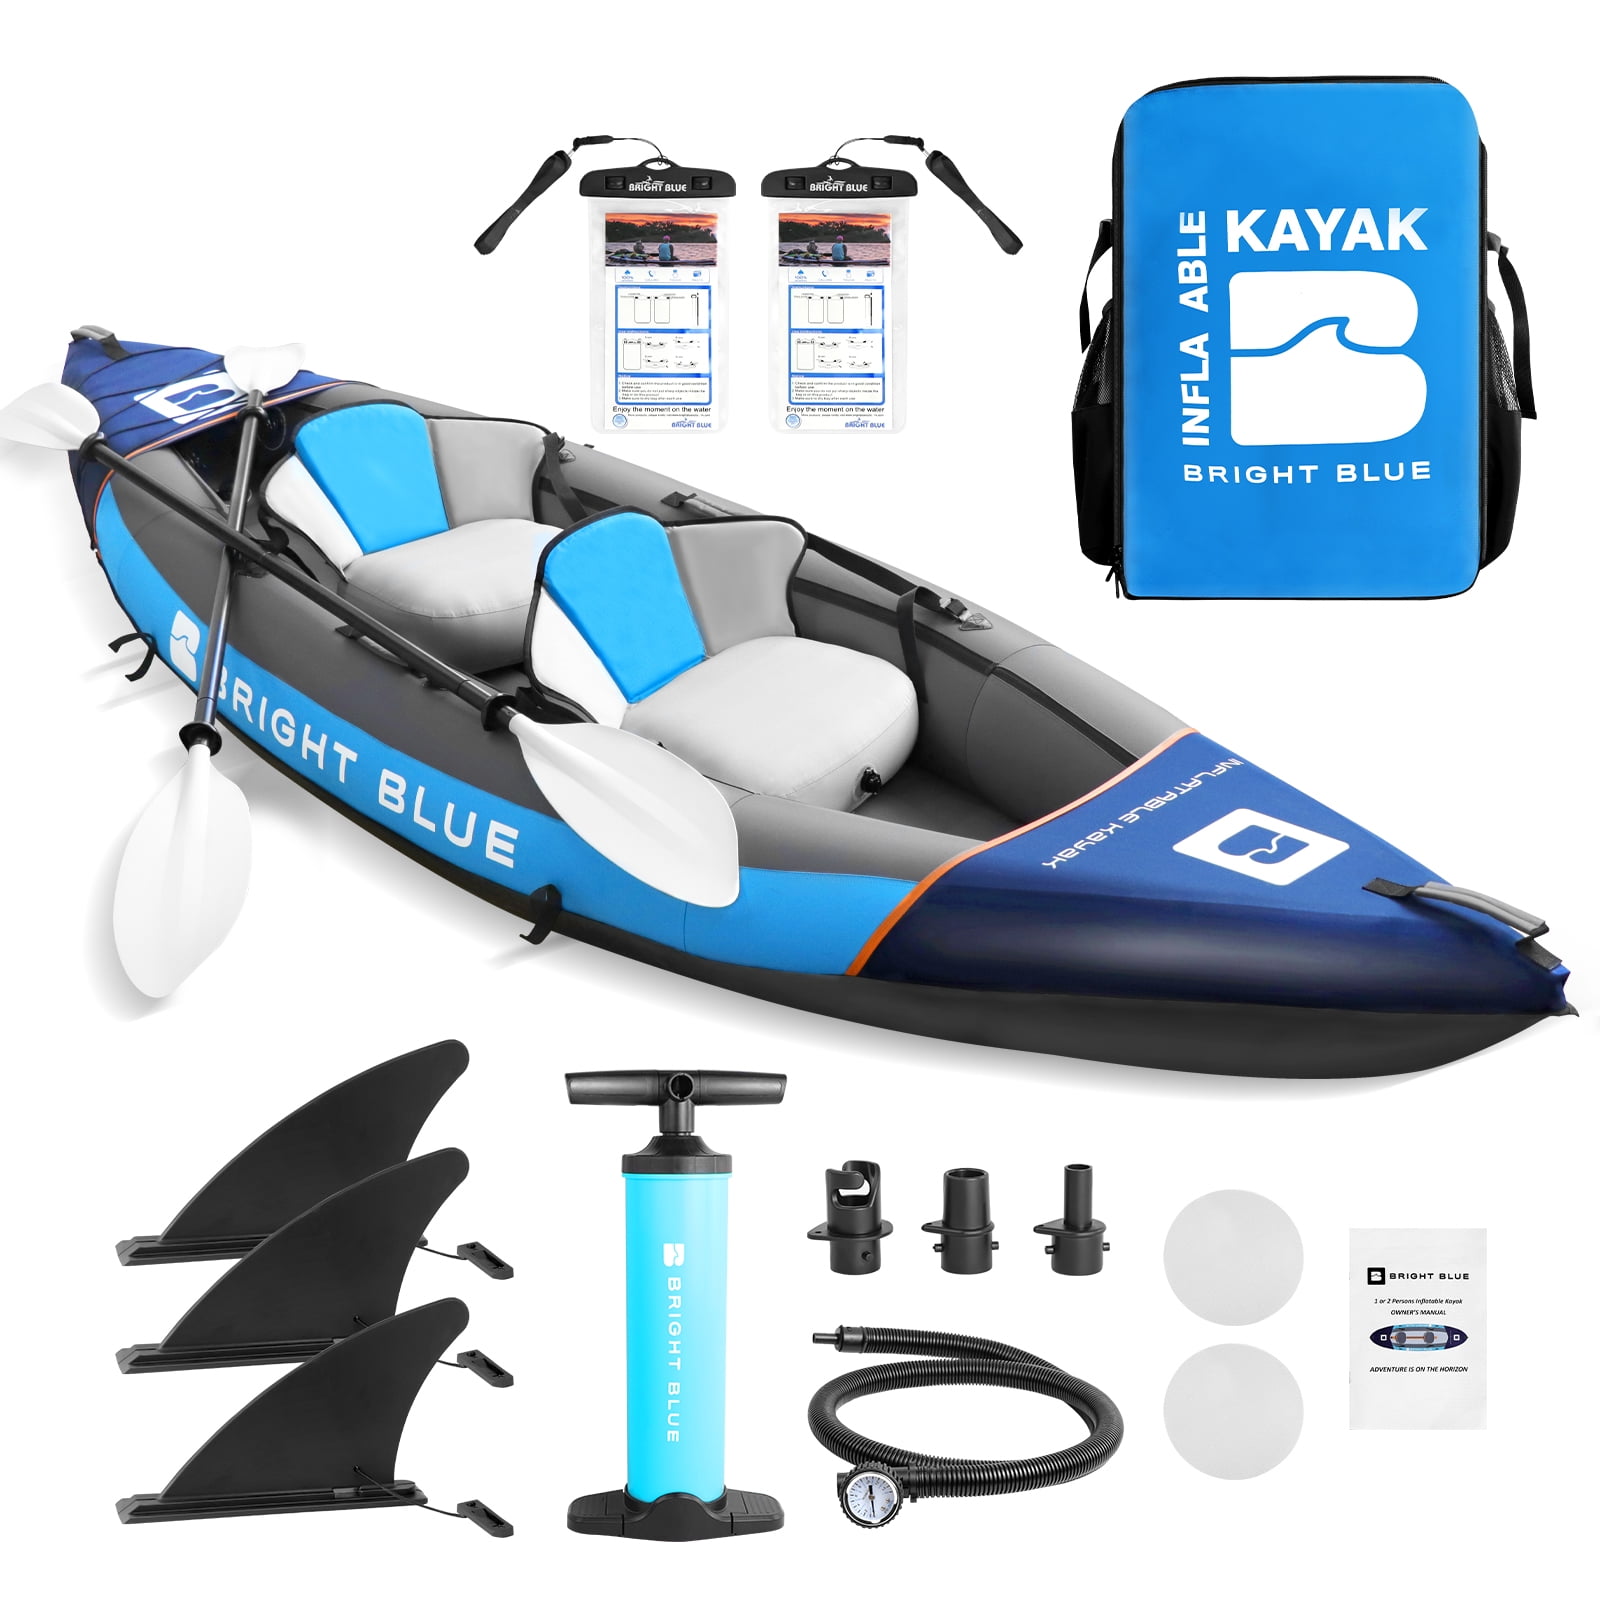 JayCreer 1-Person Inflatable Fishing Kayak Boat